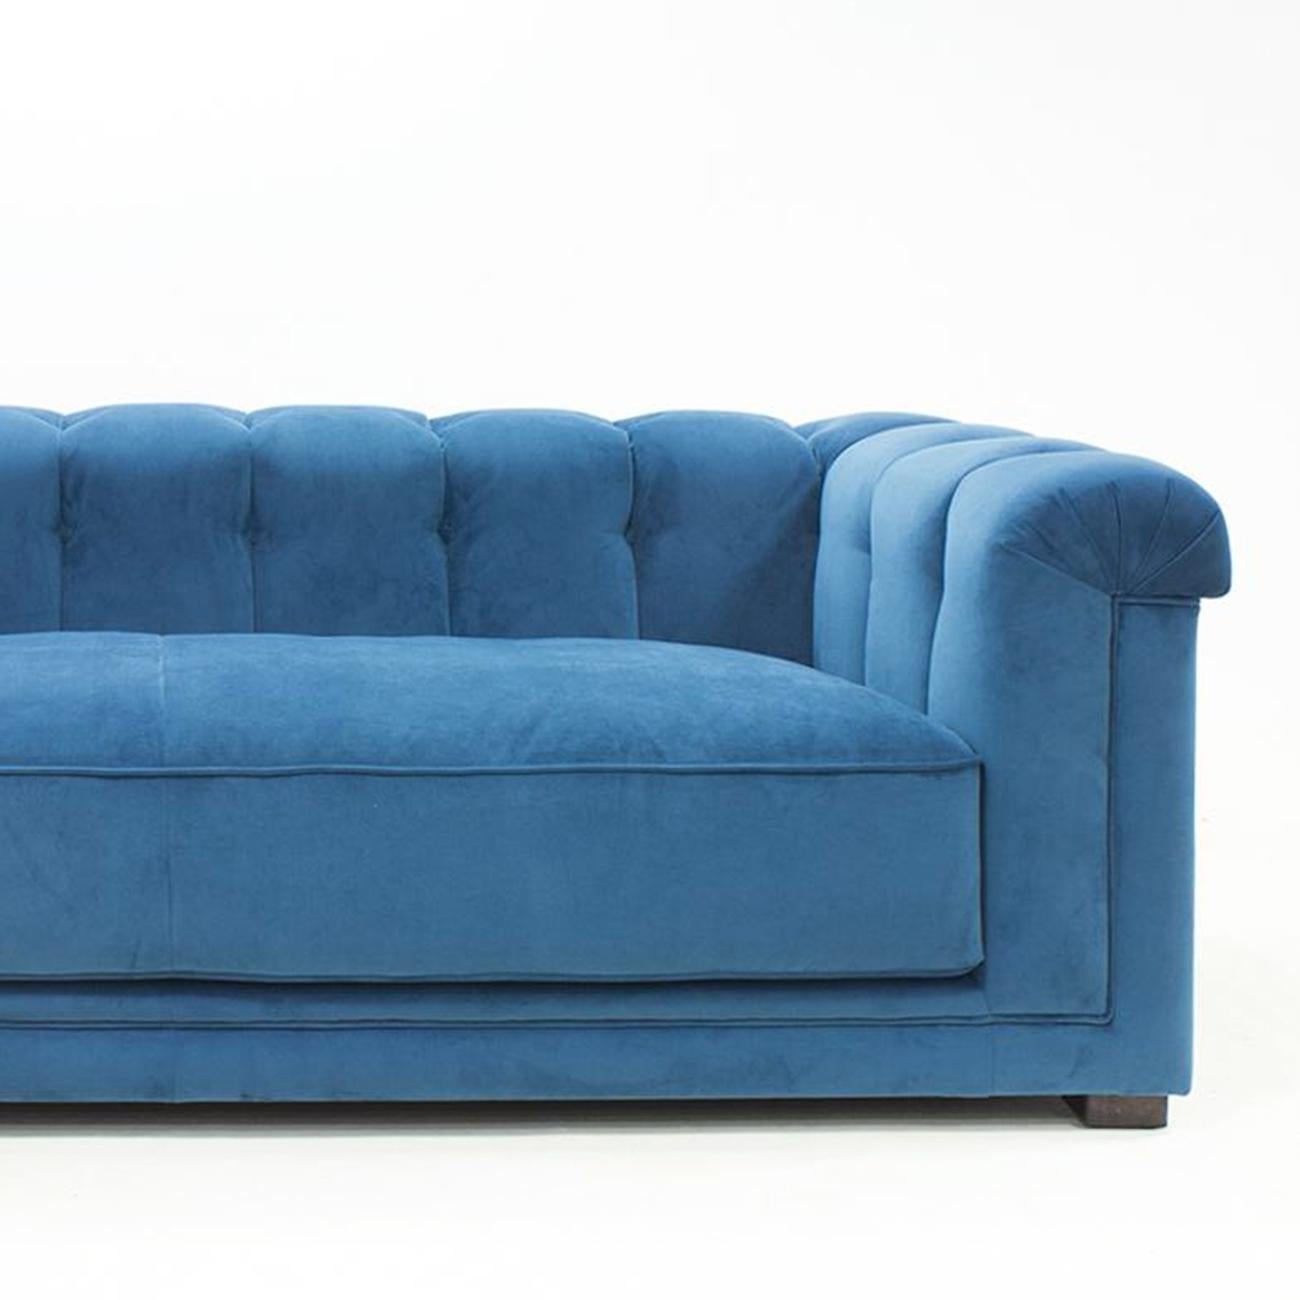 Spanish Lander Sofa For Sale